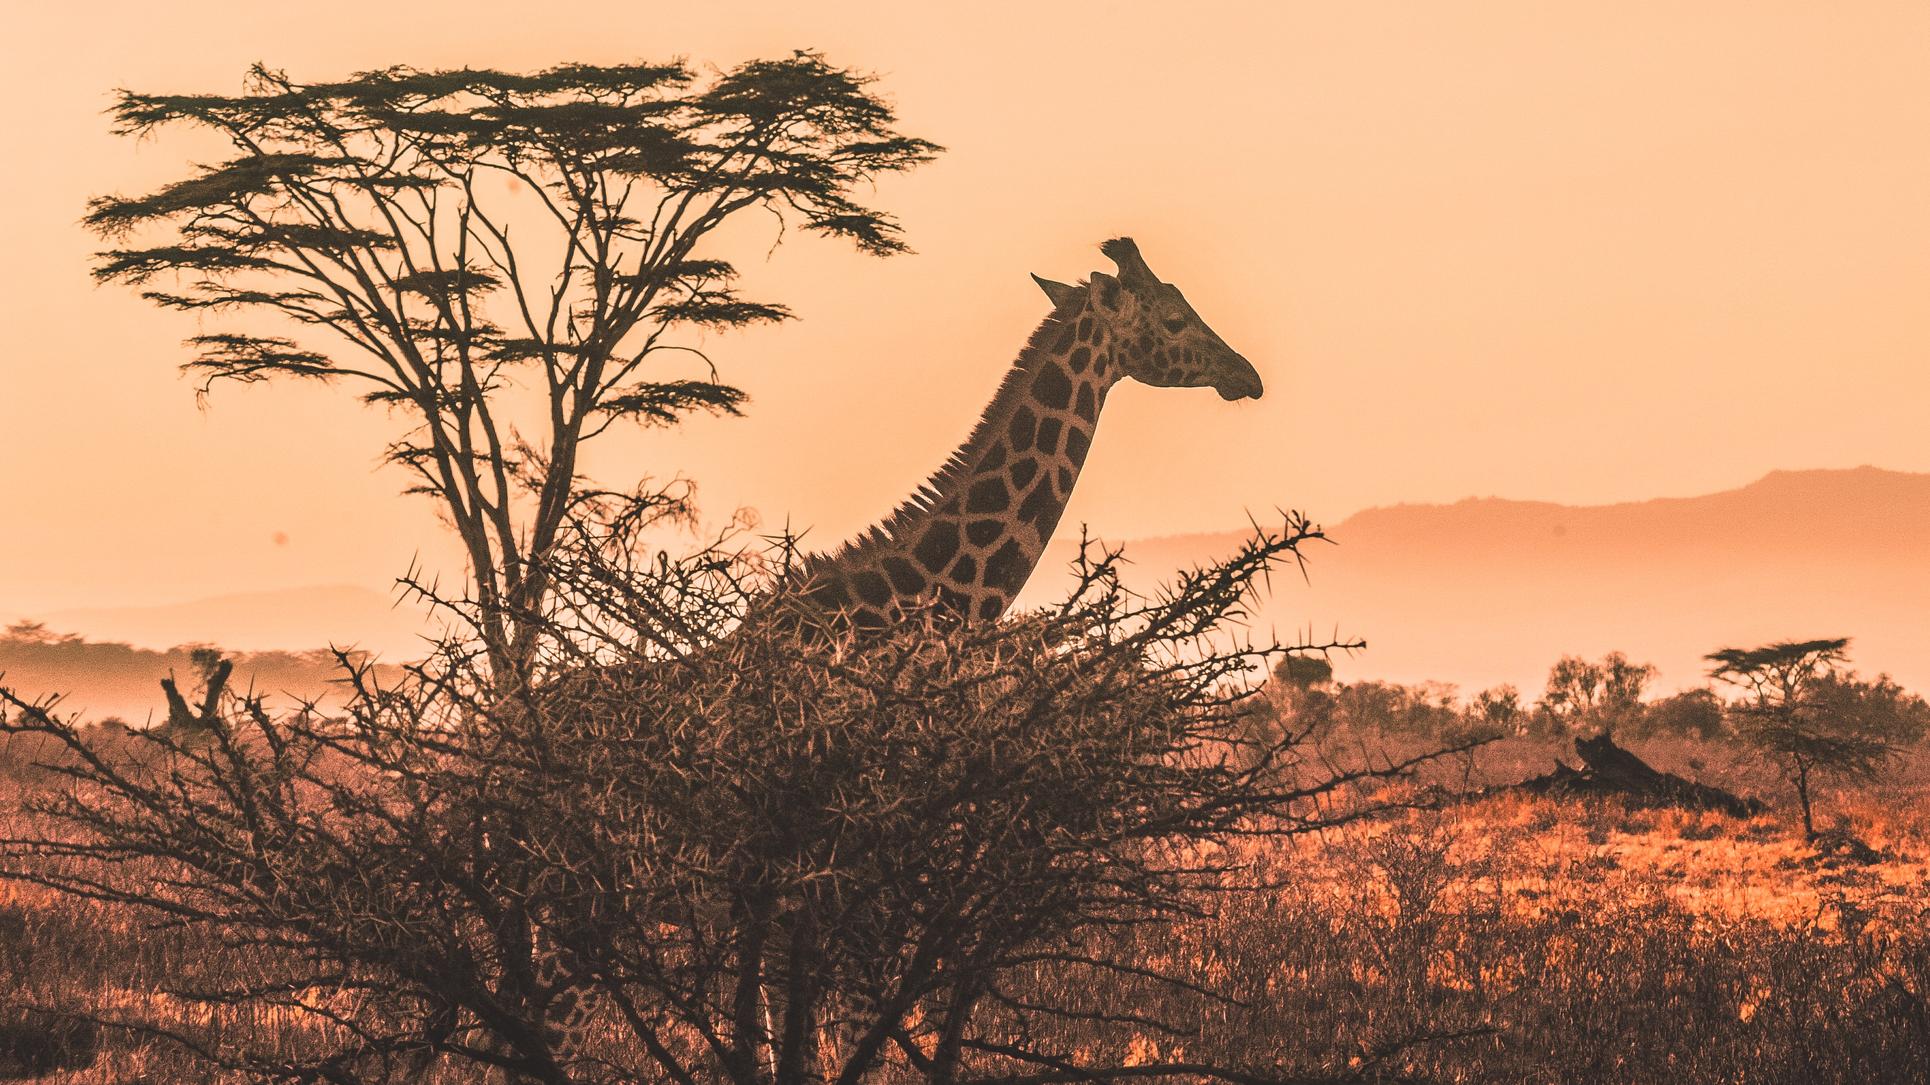 viaje lujo safari kenia sabana jirafa